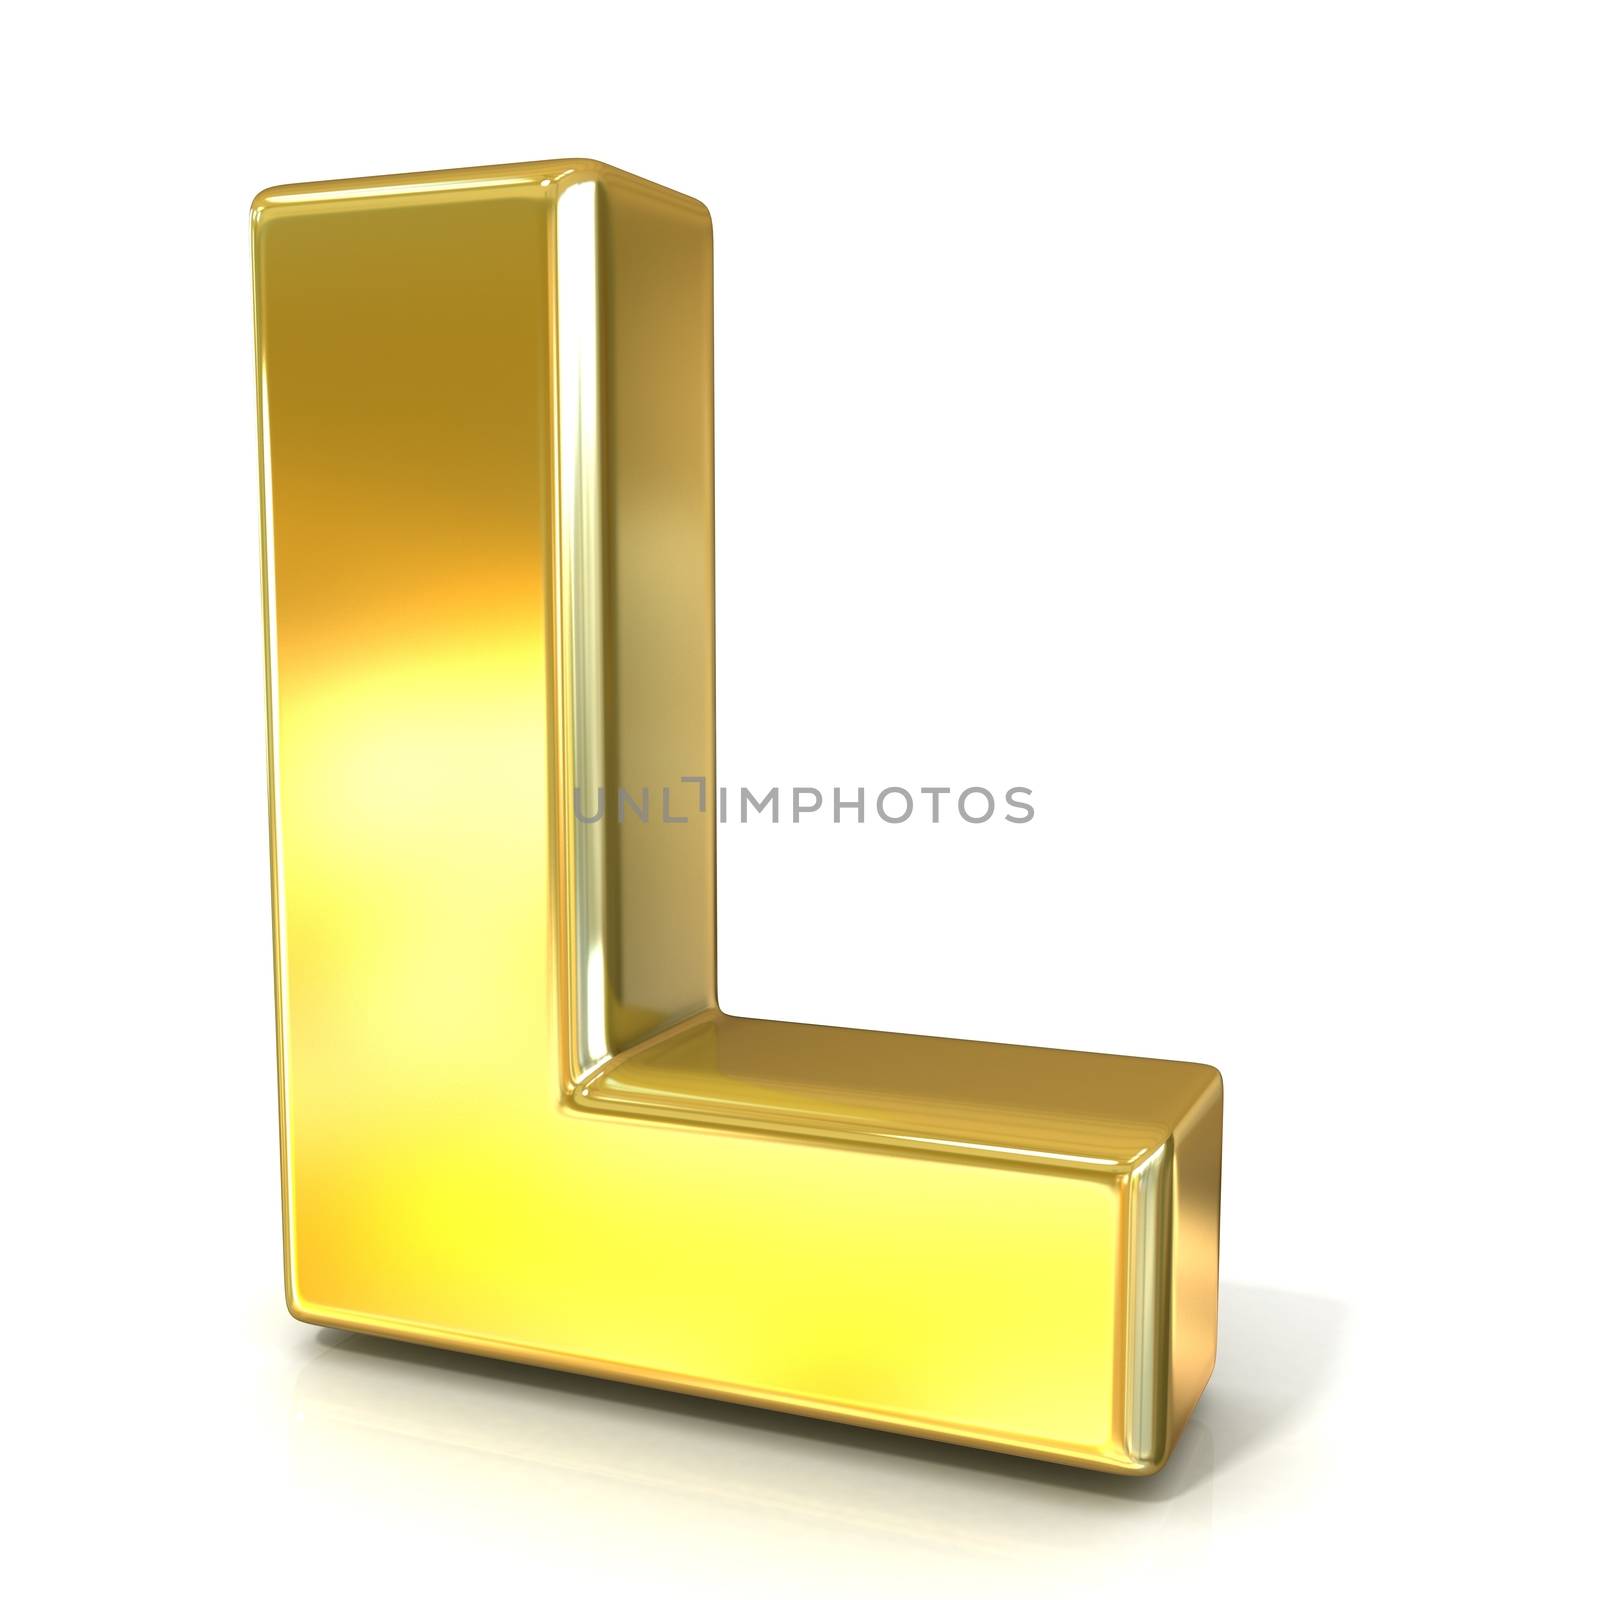 Golden font collection letter - L. 3D render illustration, isolated on white background.